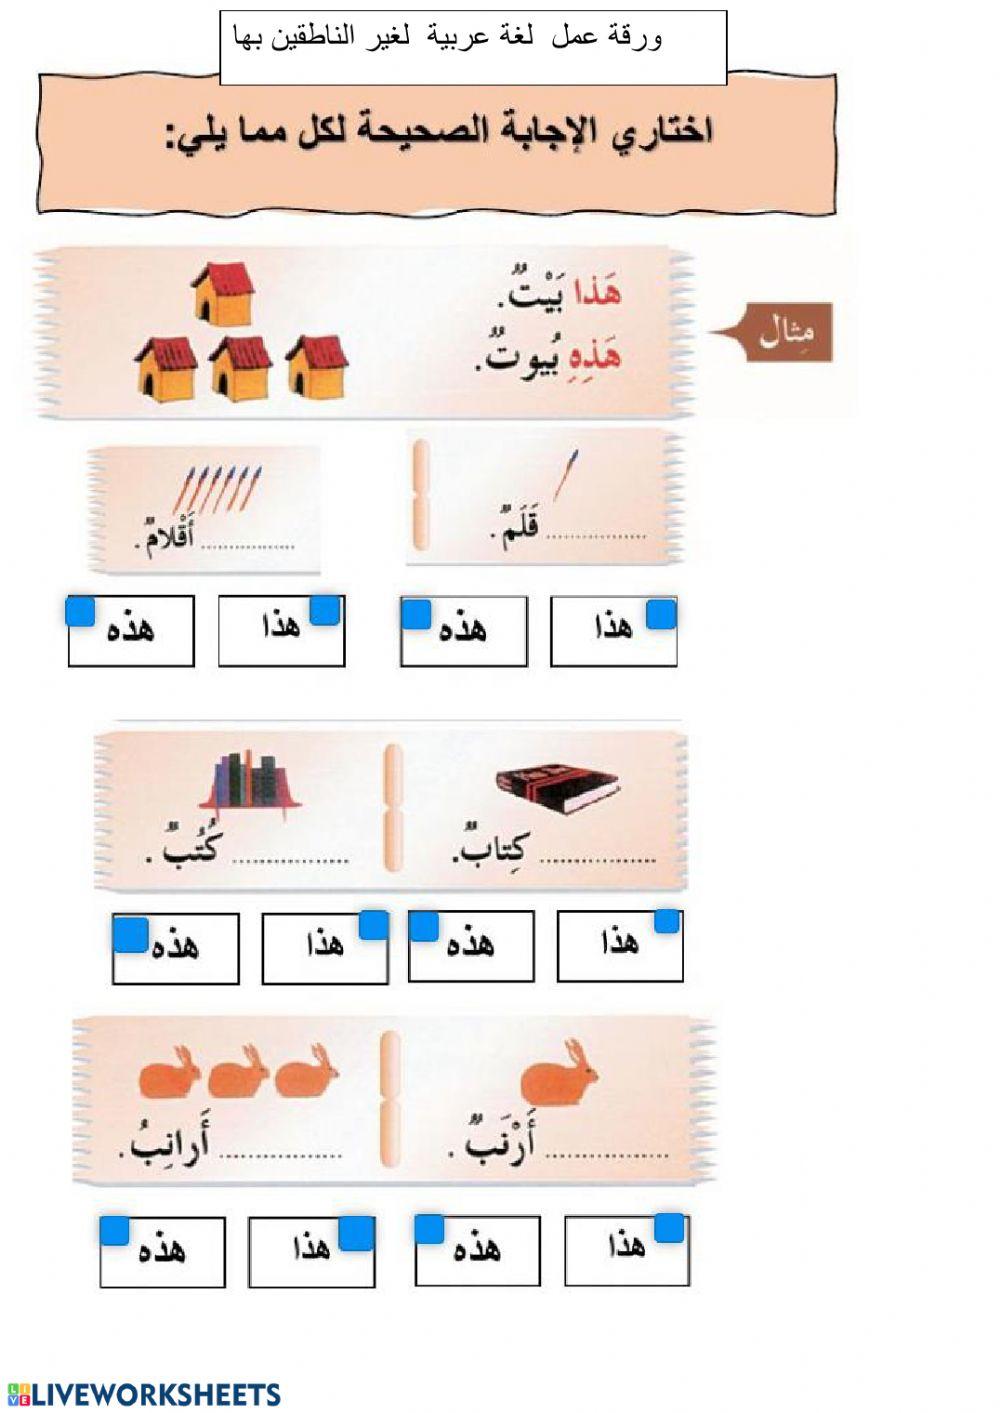 Second language Arabic